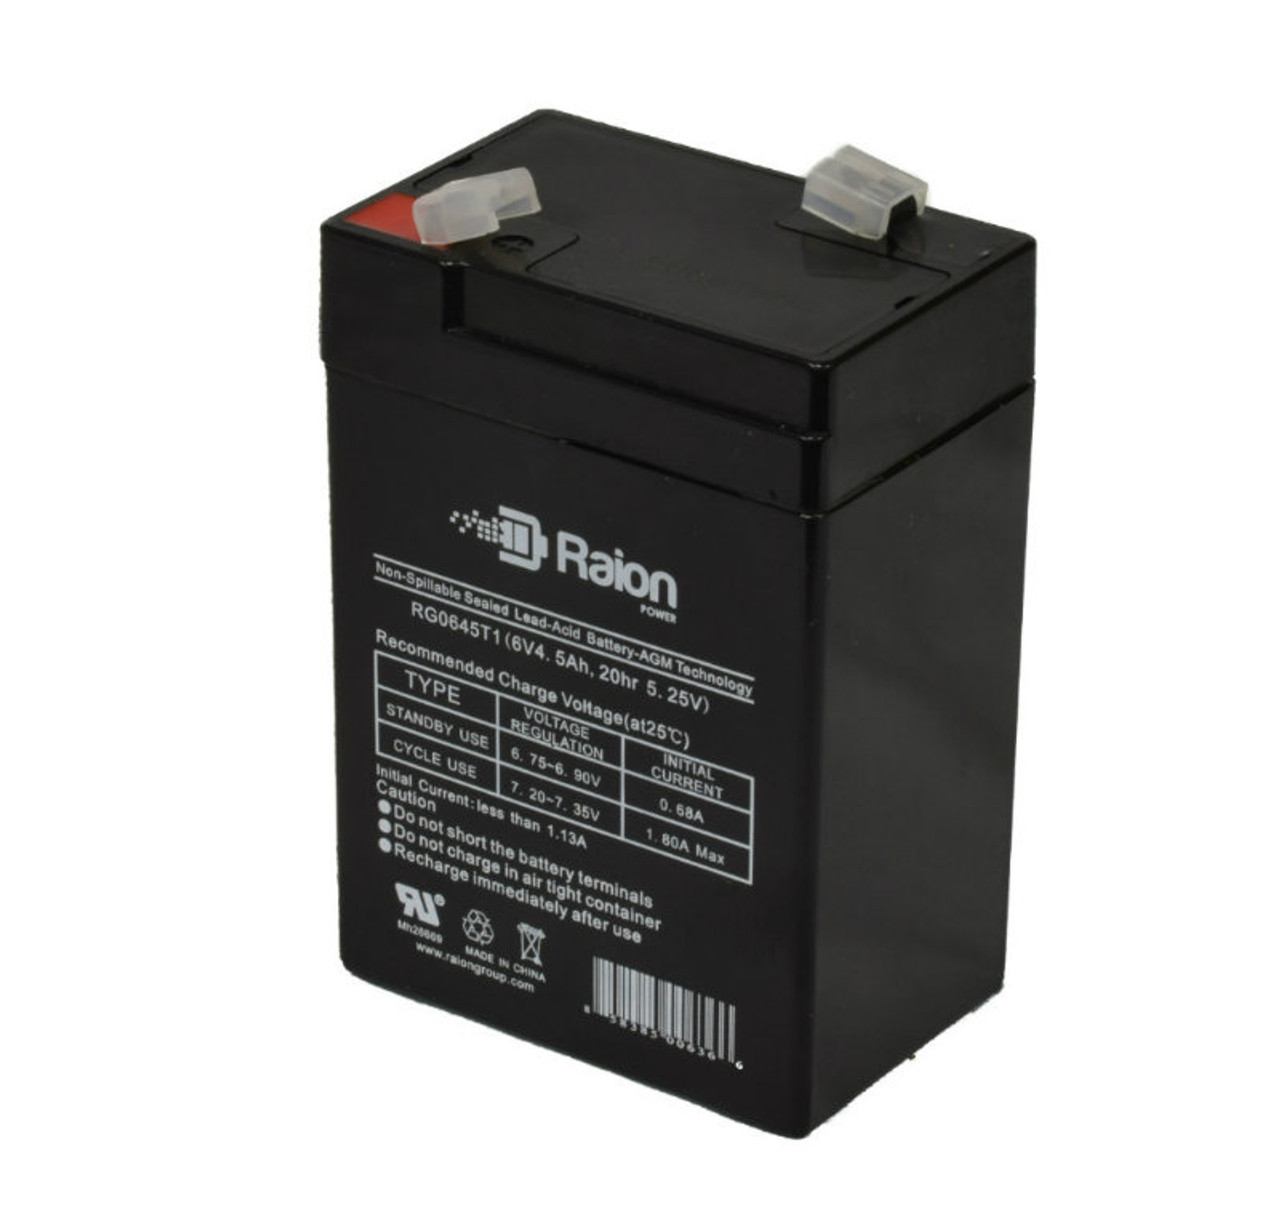 Raion Power RG0645T1 6V 4.5Ah Replacement Battery Cartridge for Douglas DG6-4E